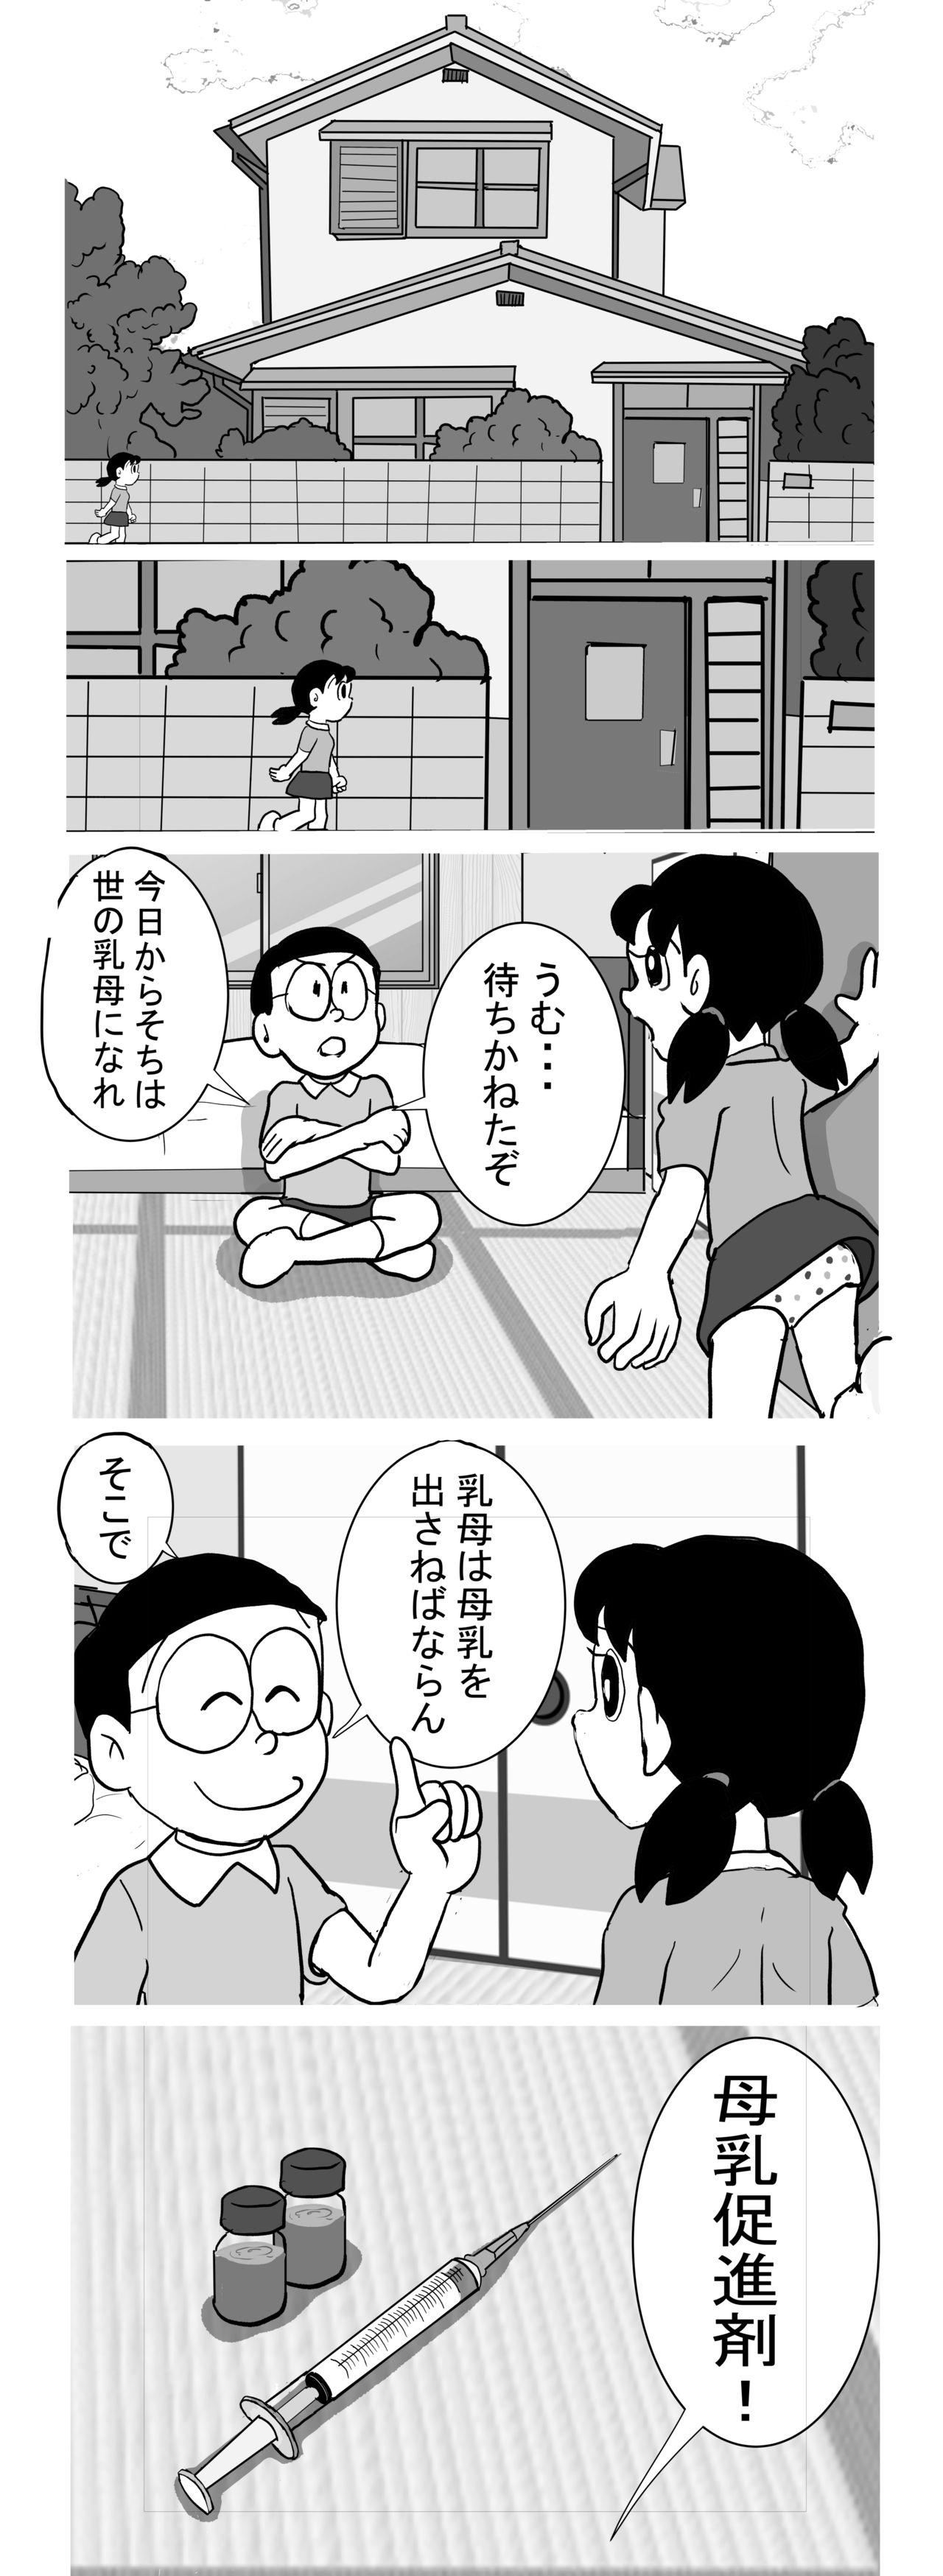 Cartoon Sizuemon - Doraemon Mms - Page 7